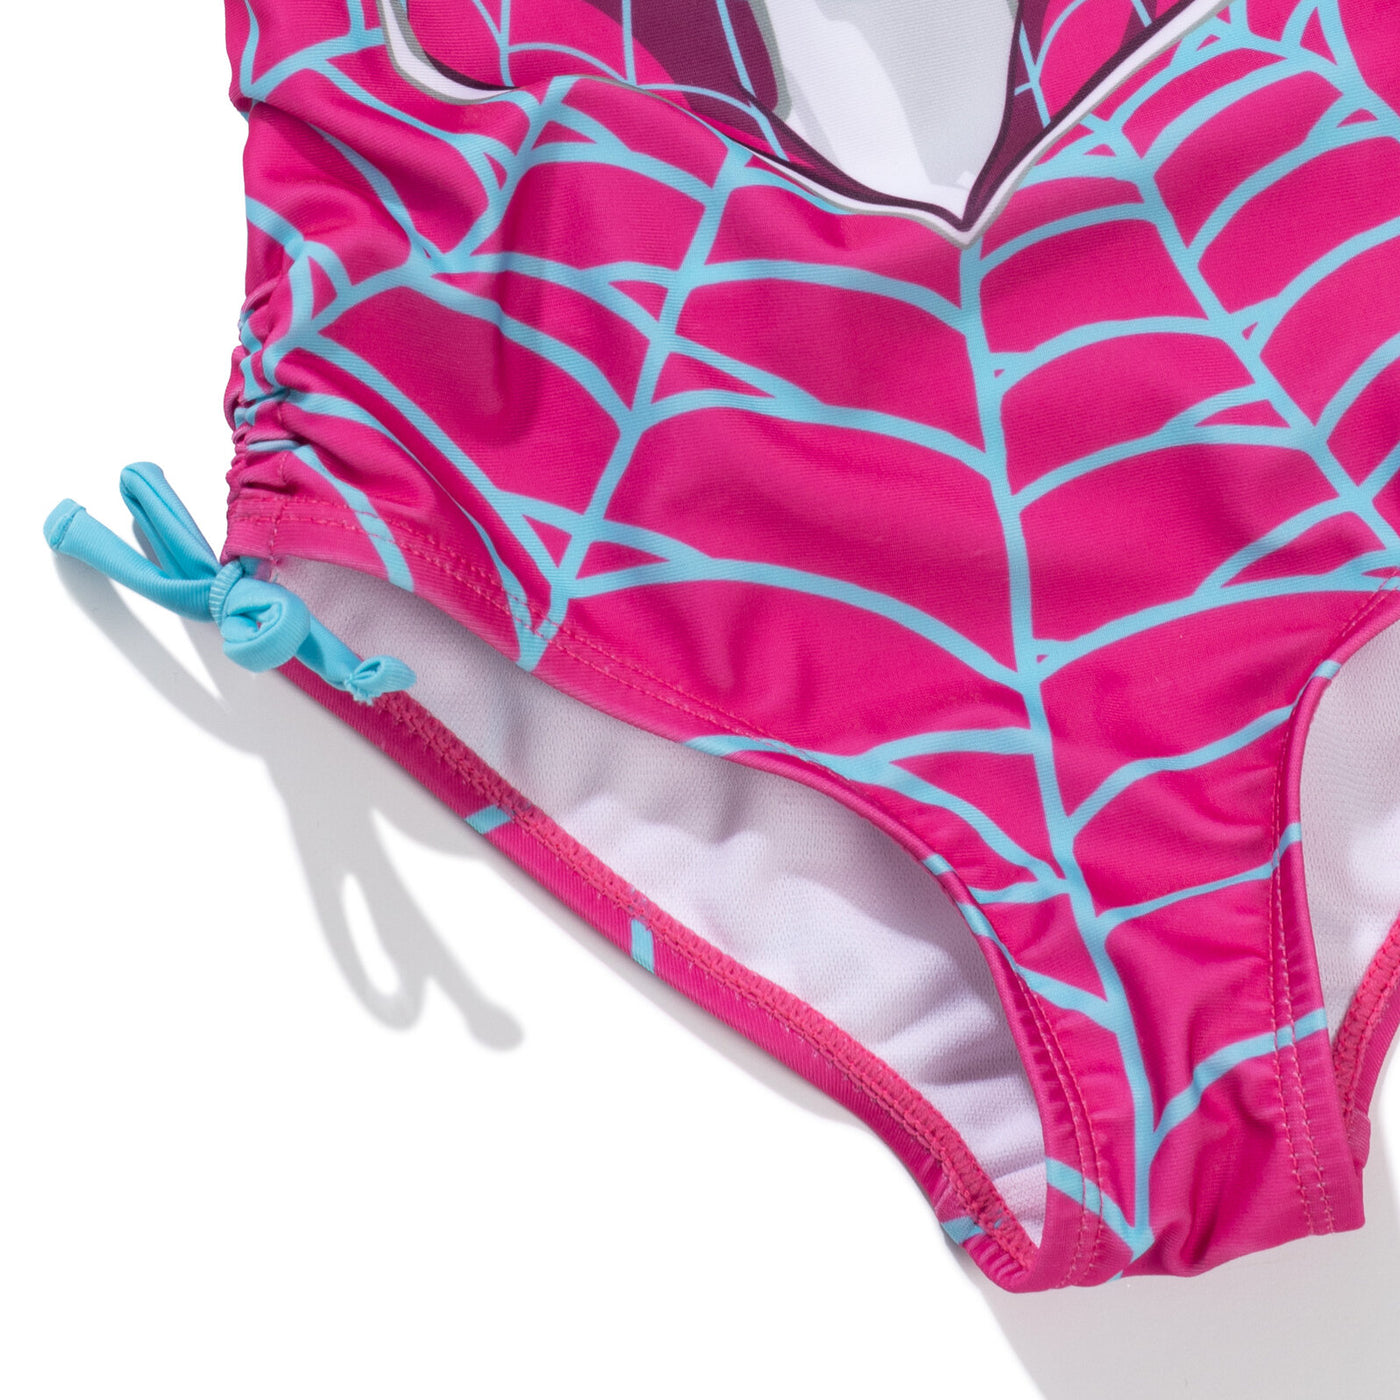 Marvel Spider-Man Ghost-Spider One Piece Bathing Suit